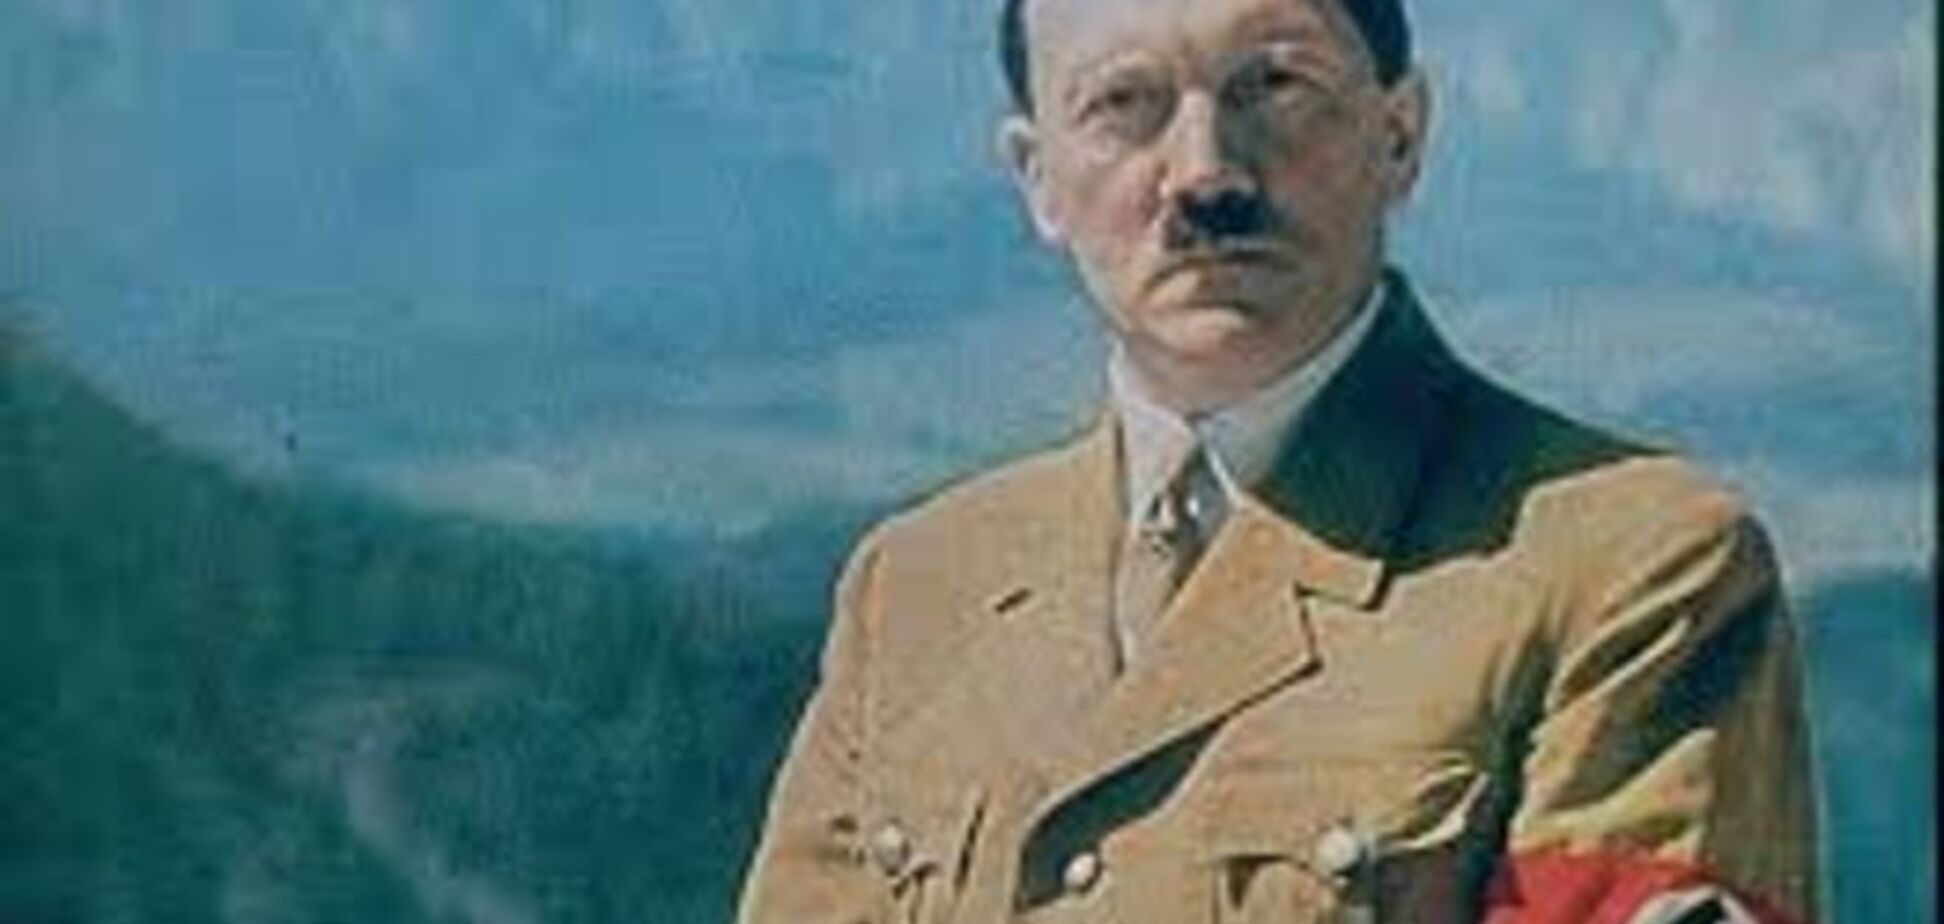 Творчество на крови: рисунки Гитлера проданы на аукционе за 300 тысяч